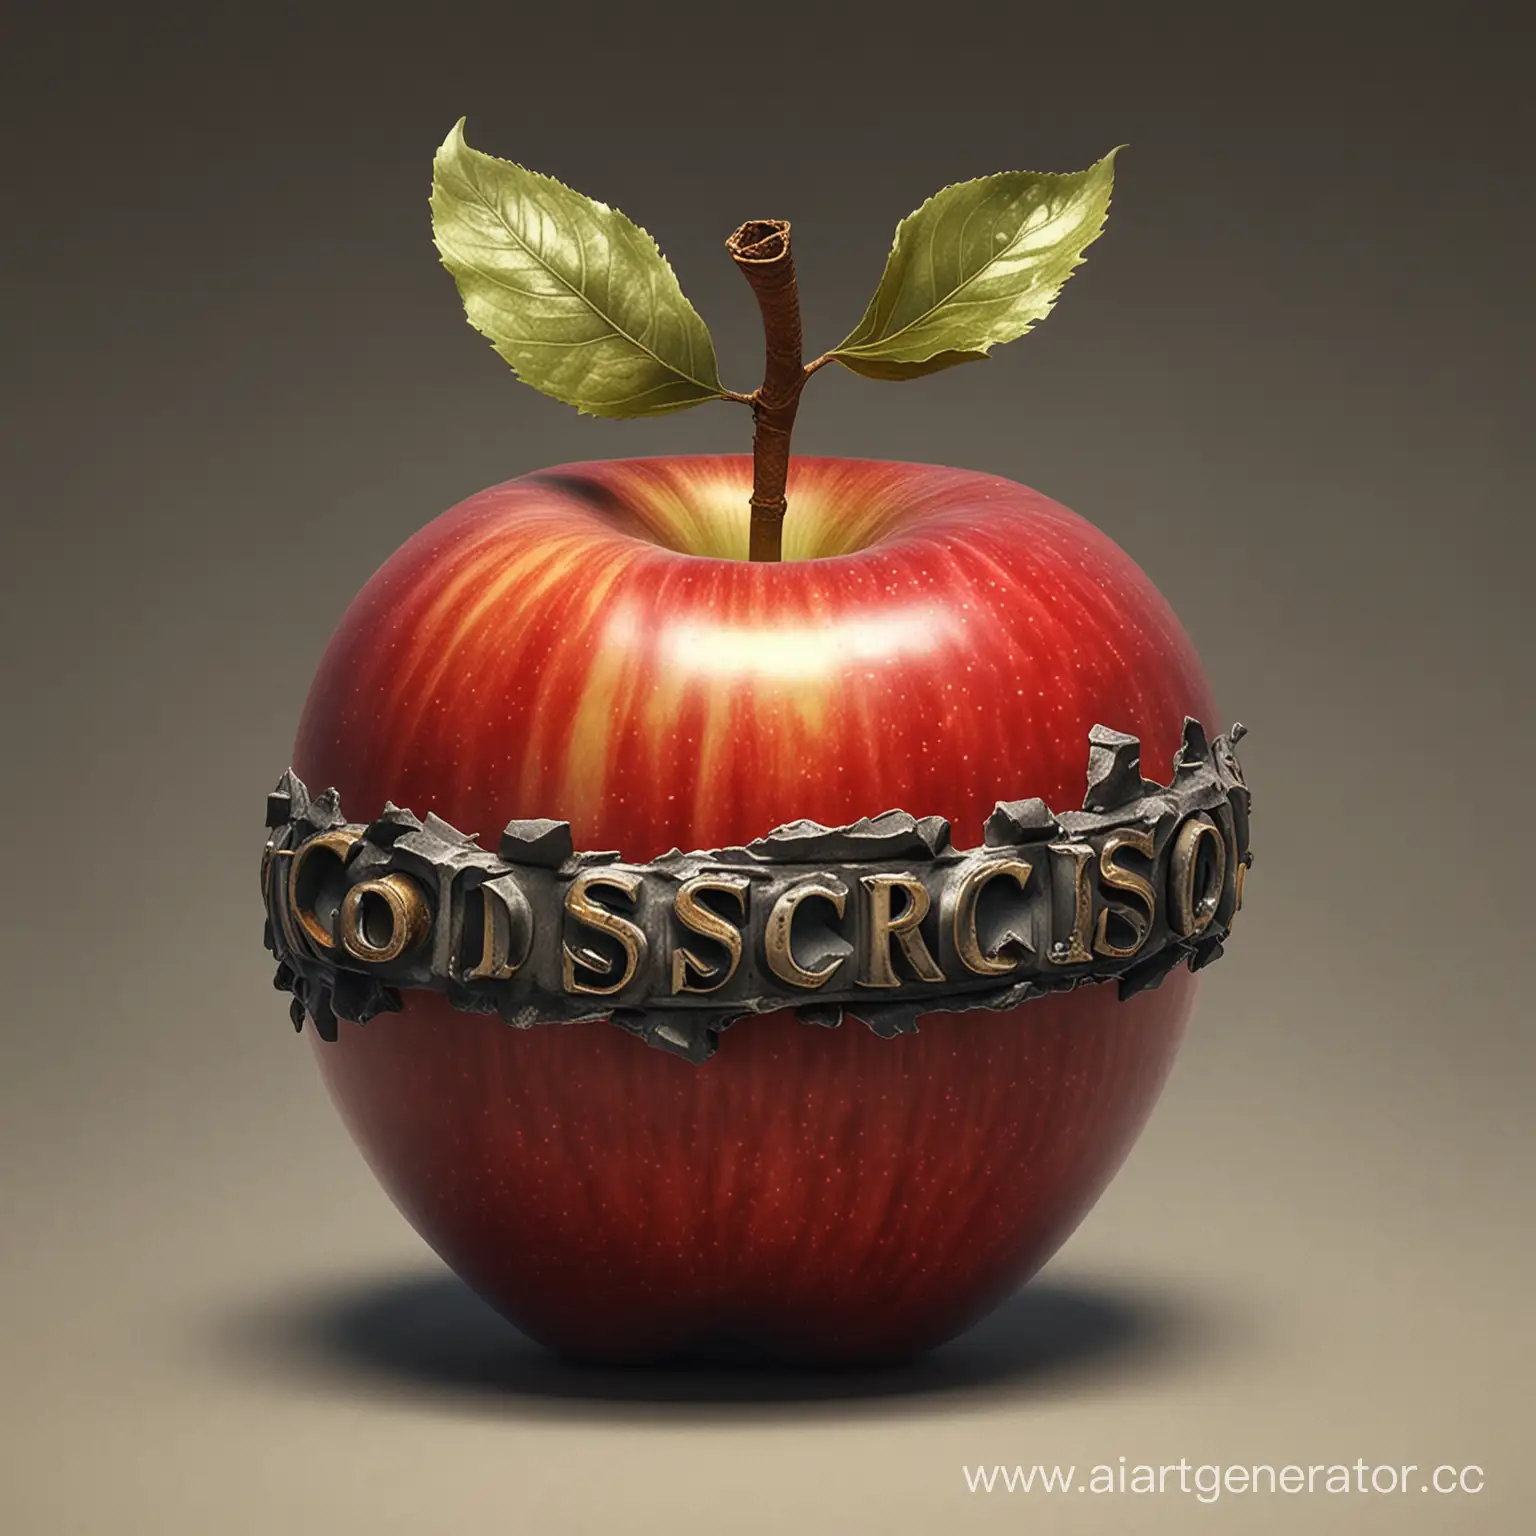 Golden-Apple-of-Discord-Mythological-Goddesses-in-a-Tense-Contest